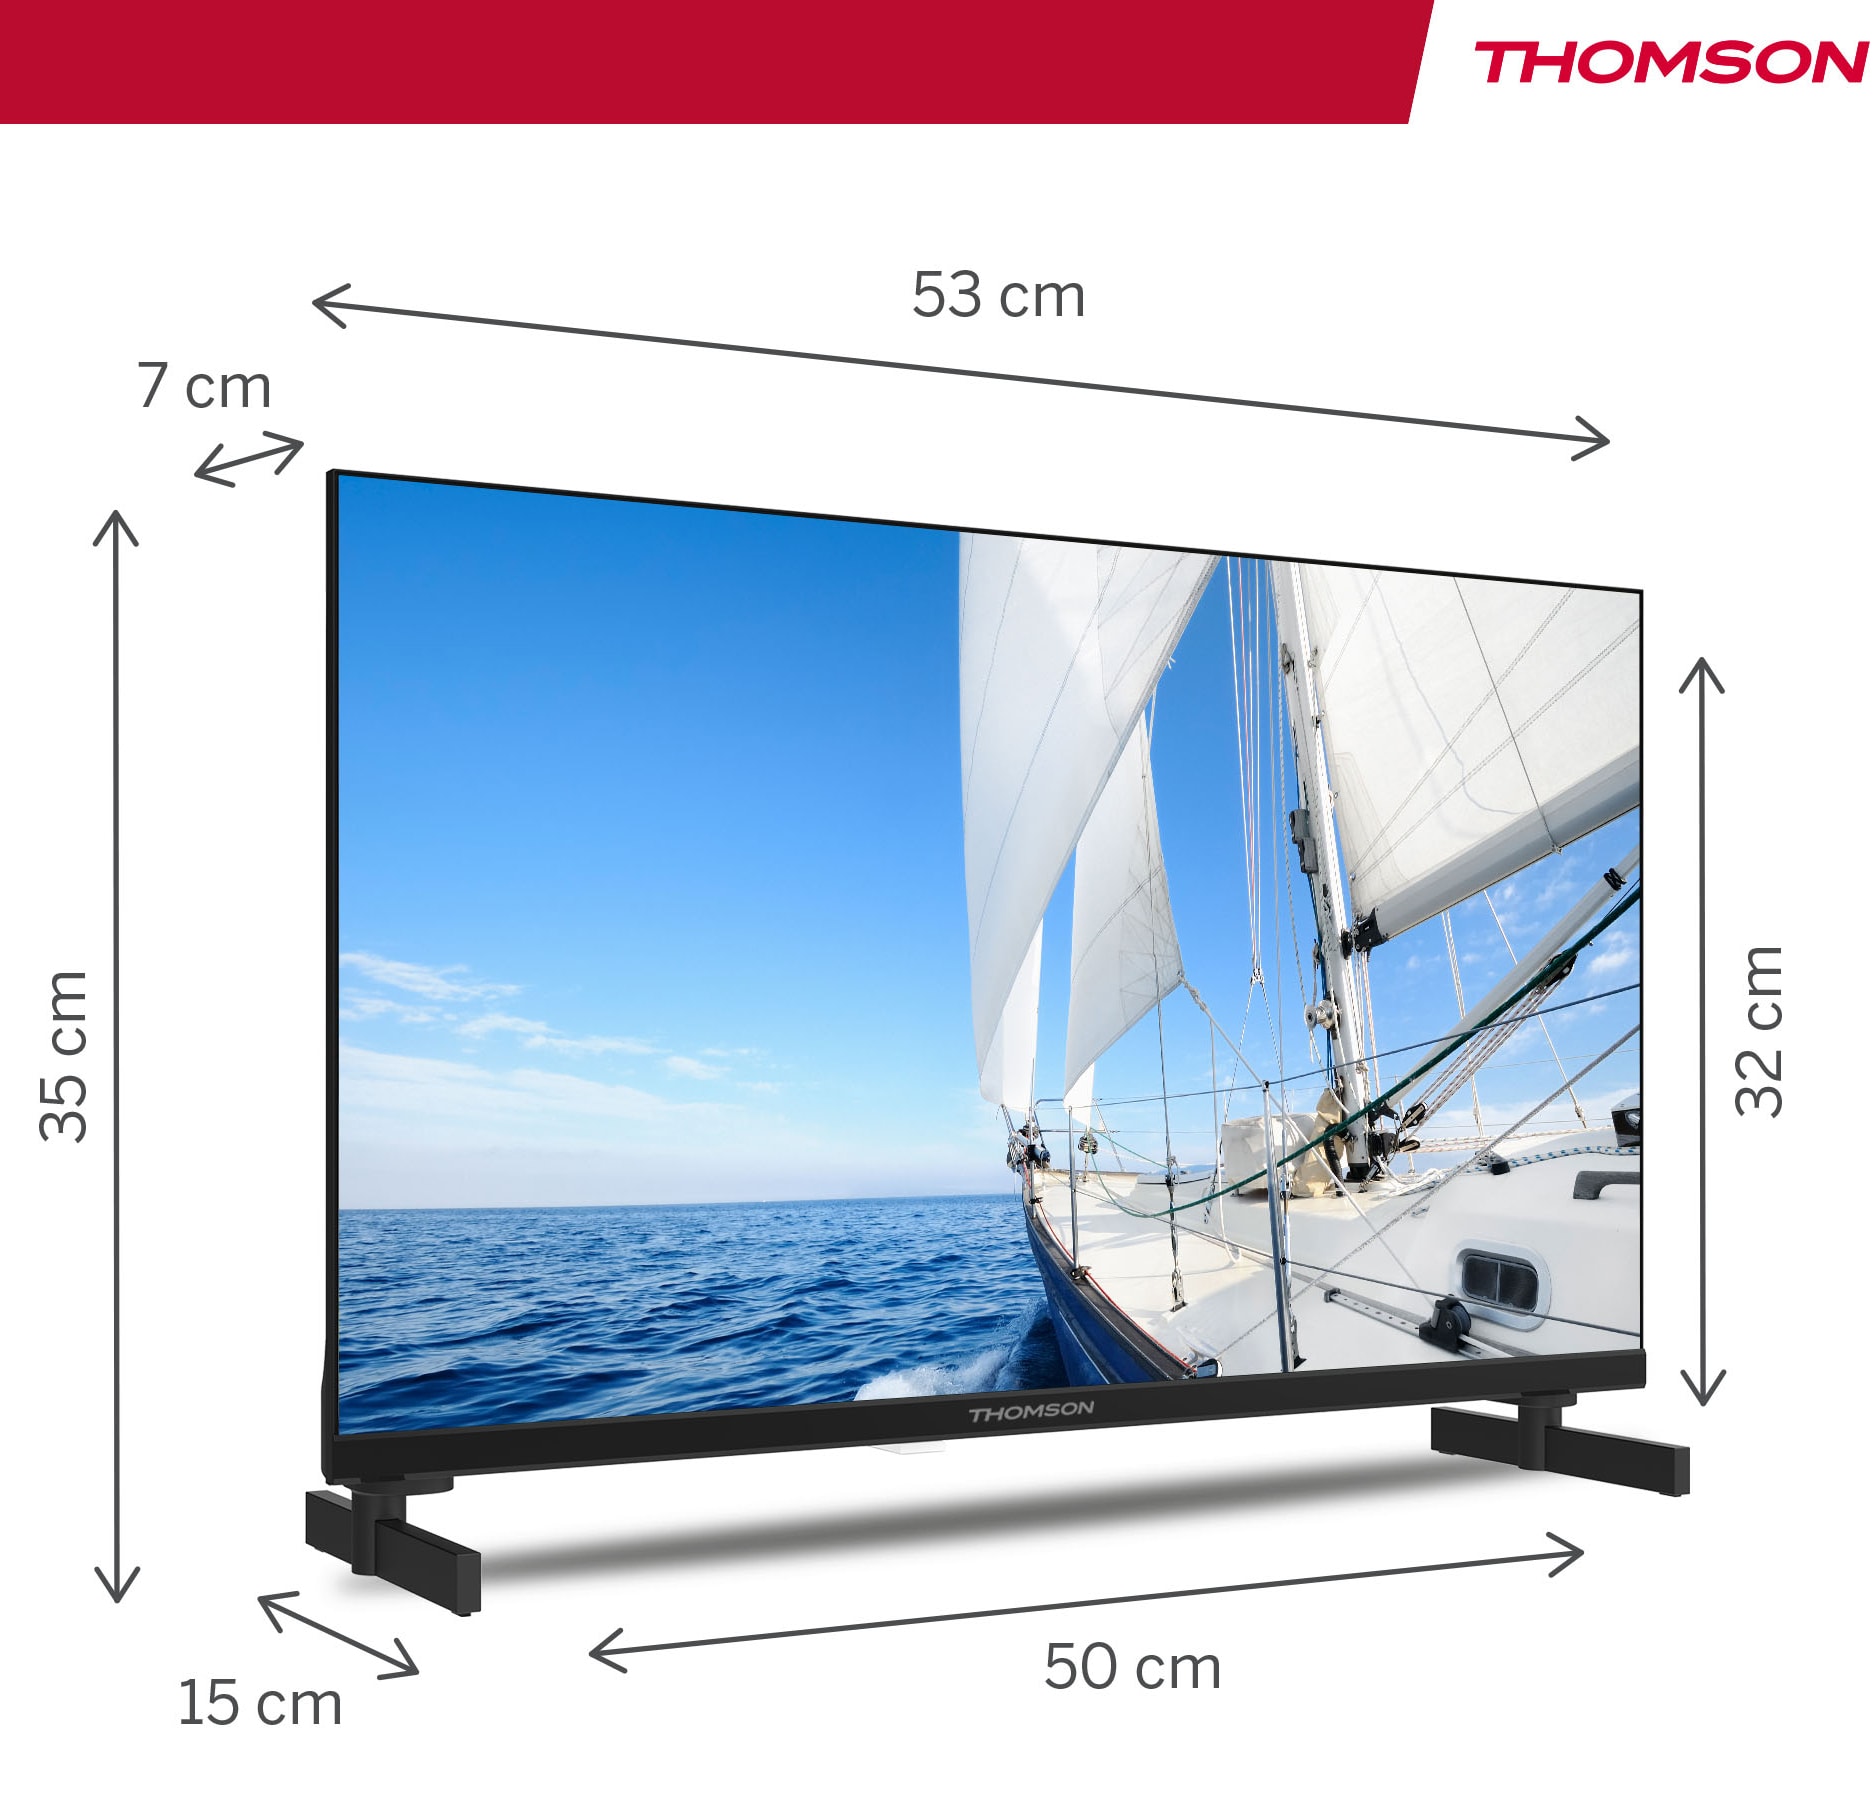 THOMSON TV LED 60 cm  - 24HG2S14C